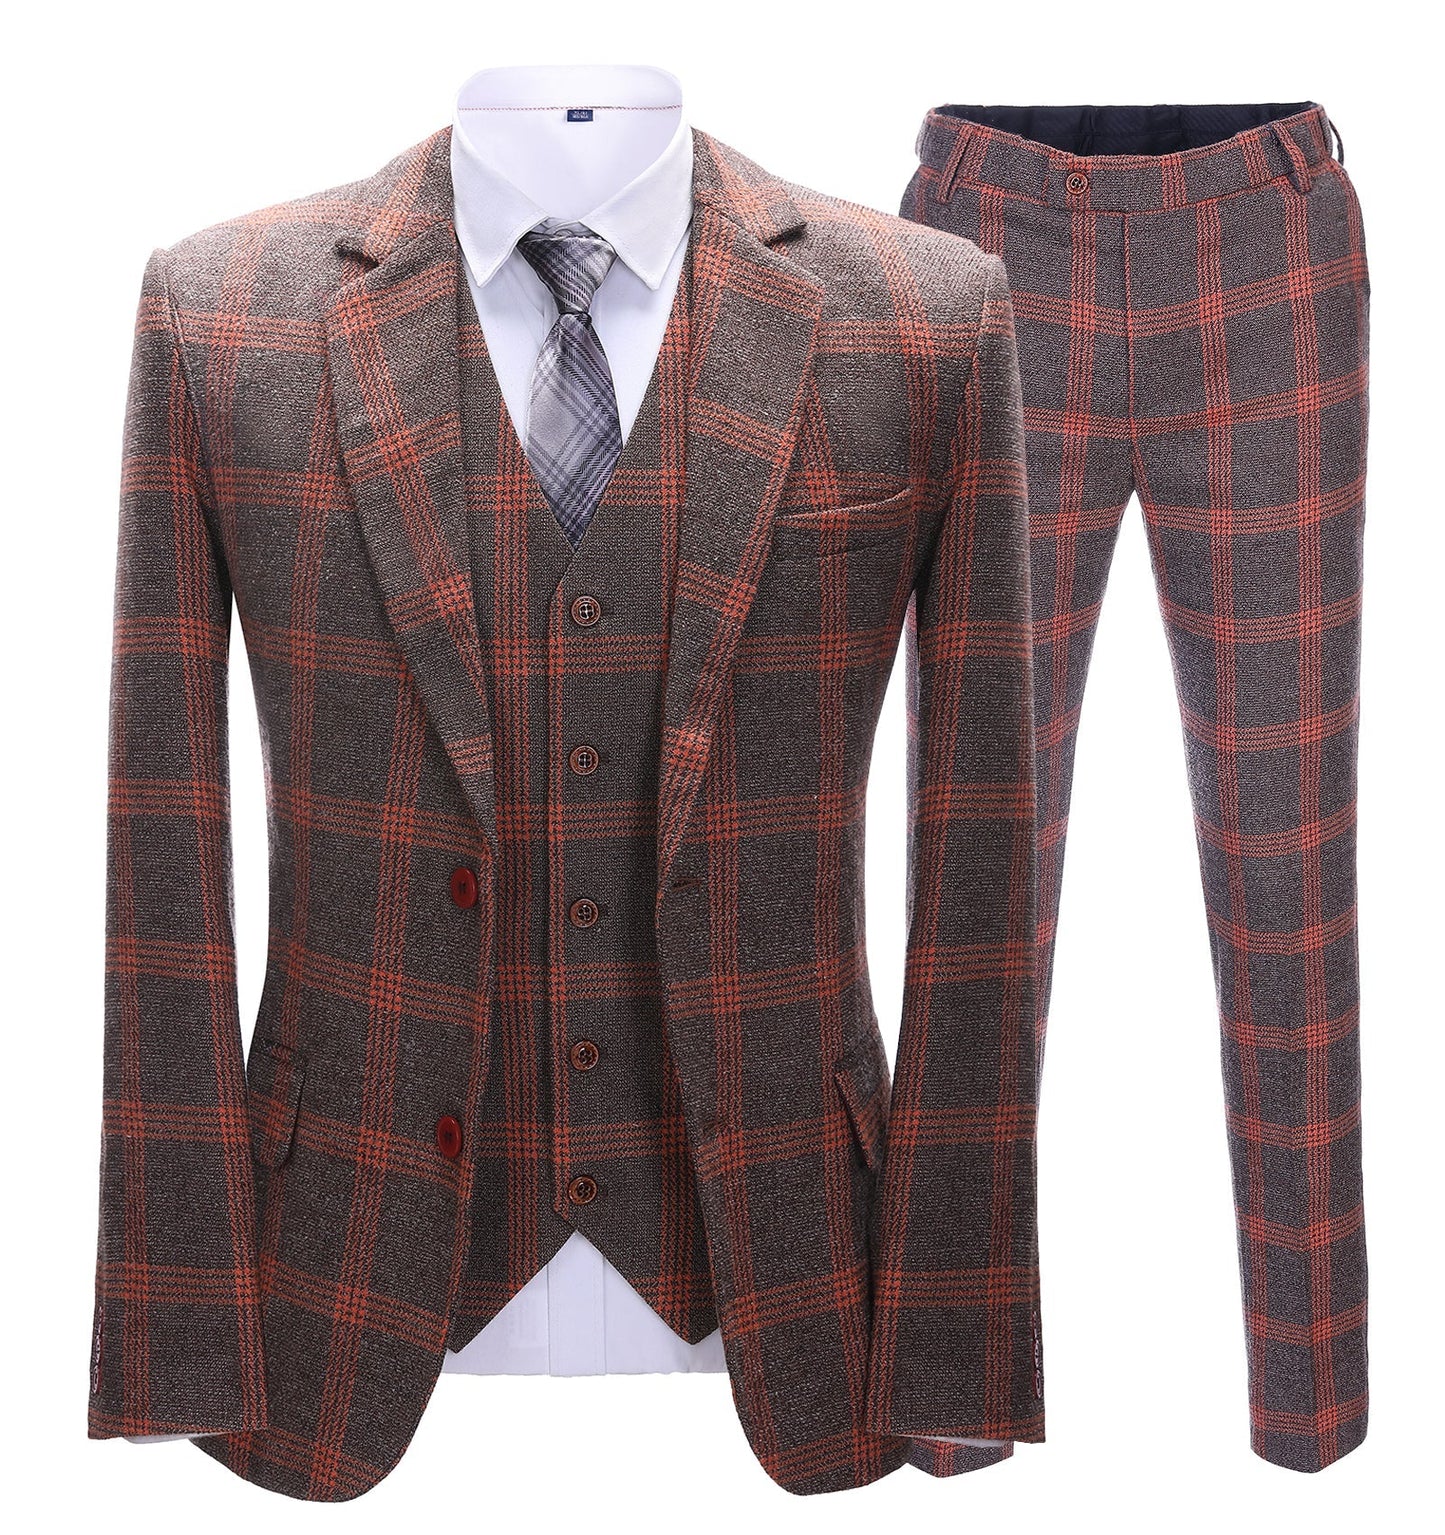 Men's 3 Pieces Classic Brick Red Coarse Plaid Suit